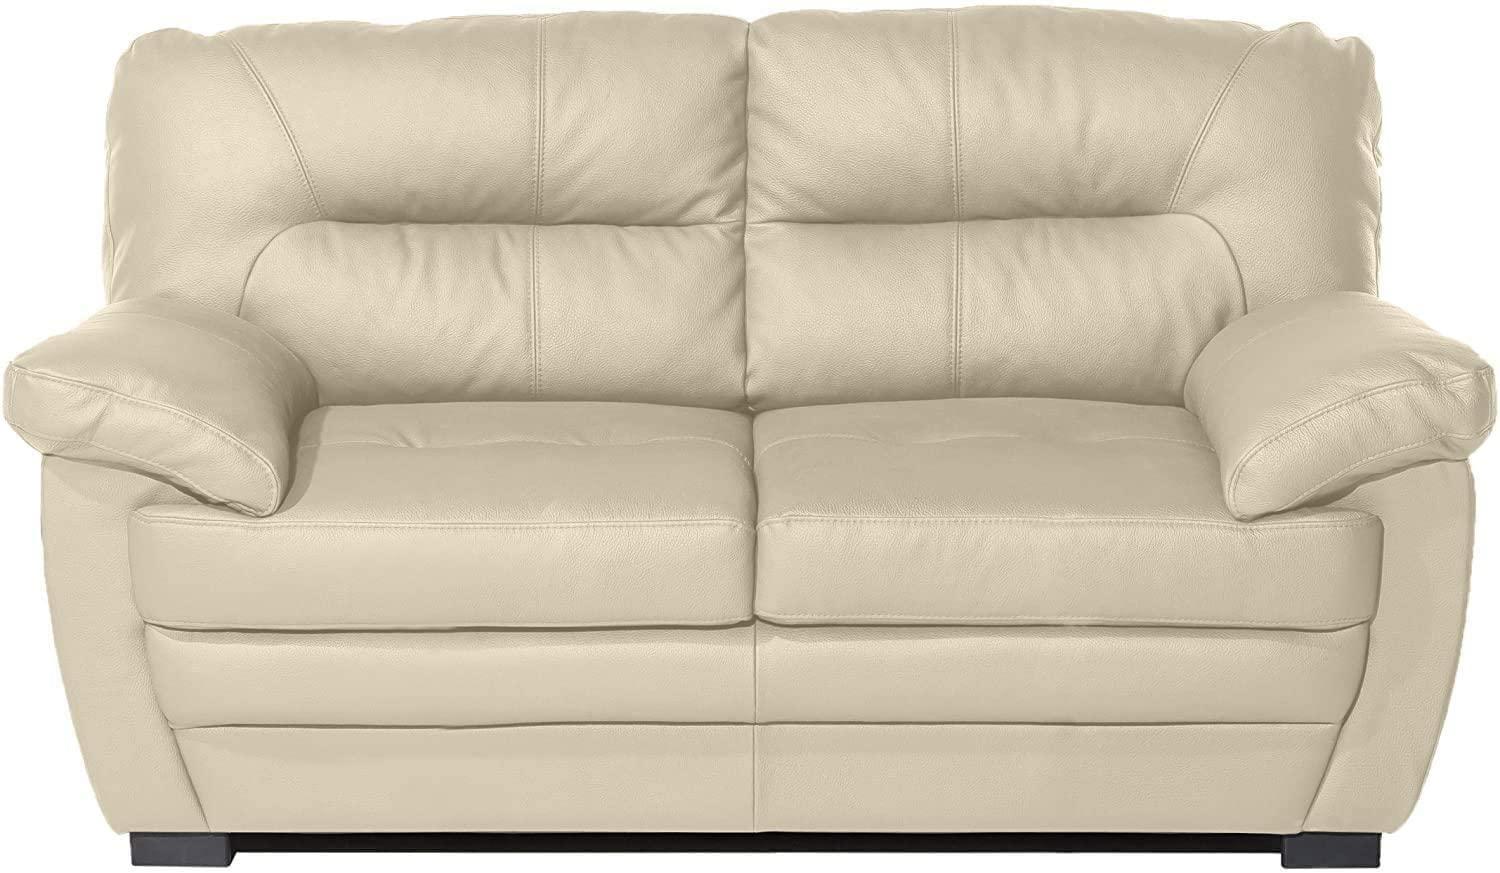 Mivano 2er-Sofa Royale / Zeitloses, bequemes Ledersofa mit hoher Rückenlehne / 160 x 86 x 90 / Lederimitat, Beige Bild 1